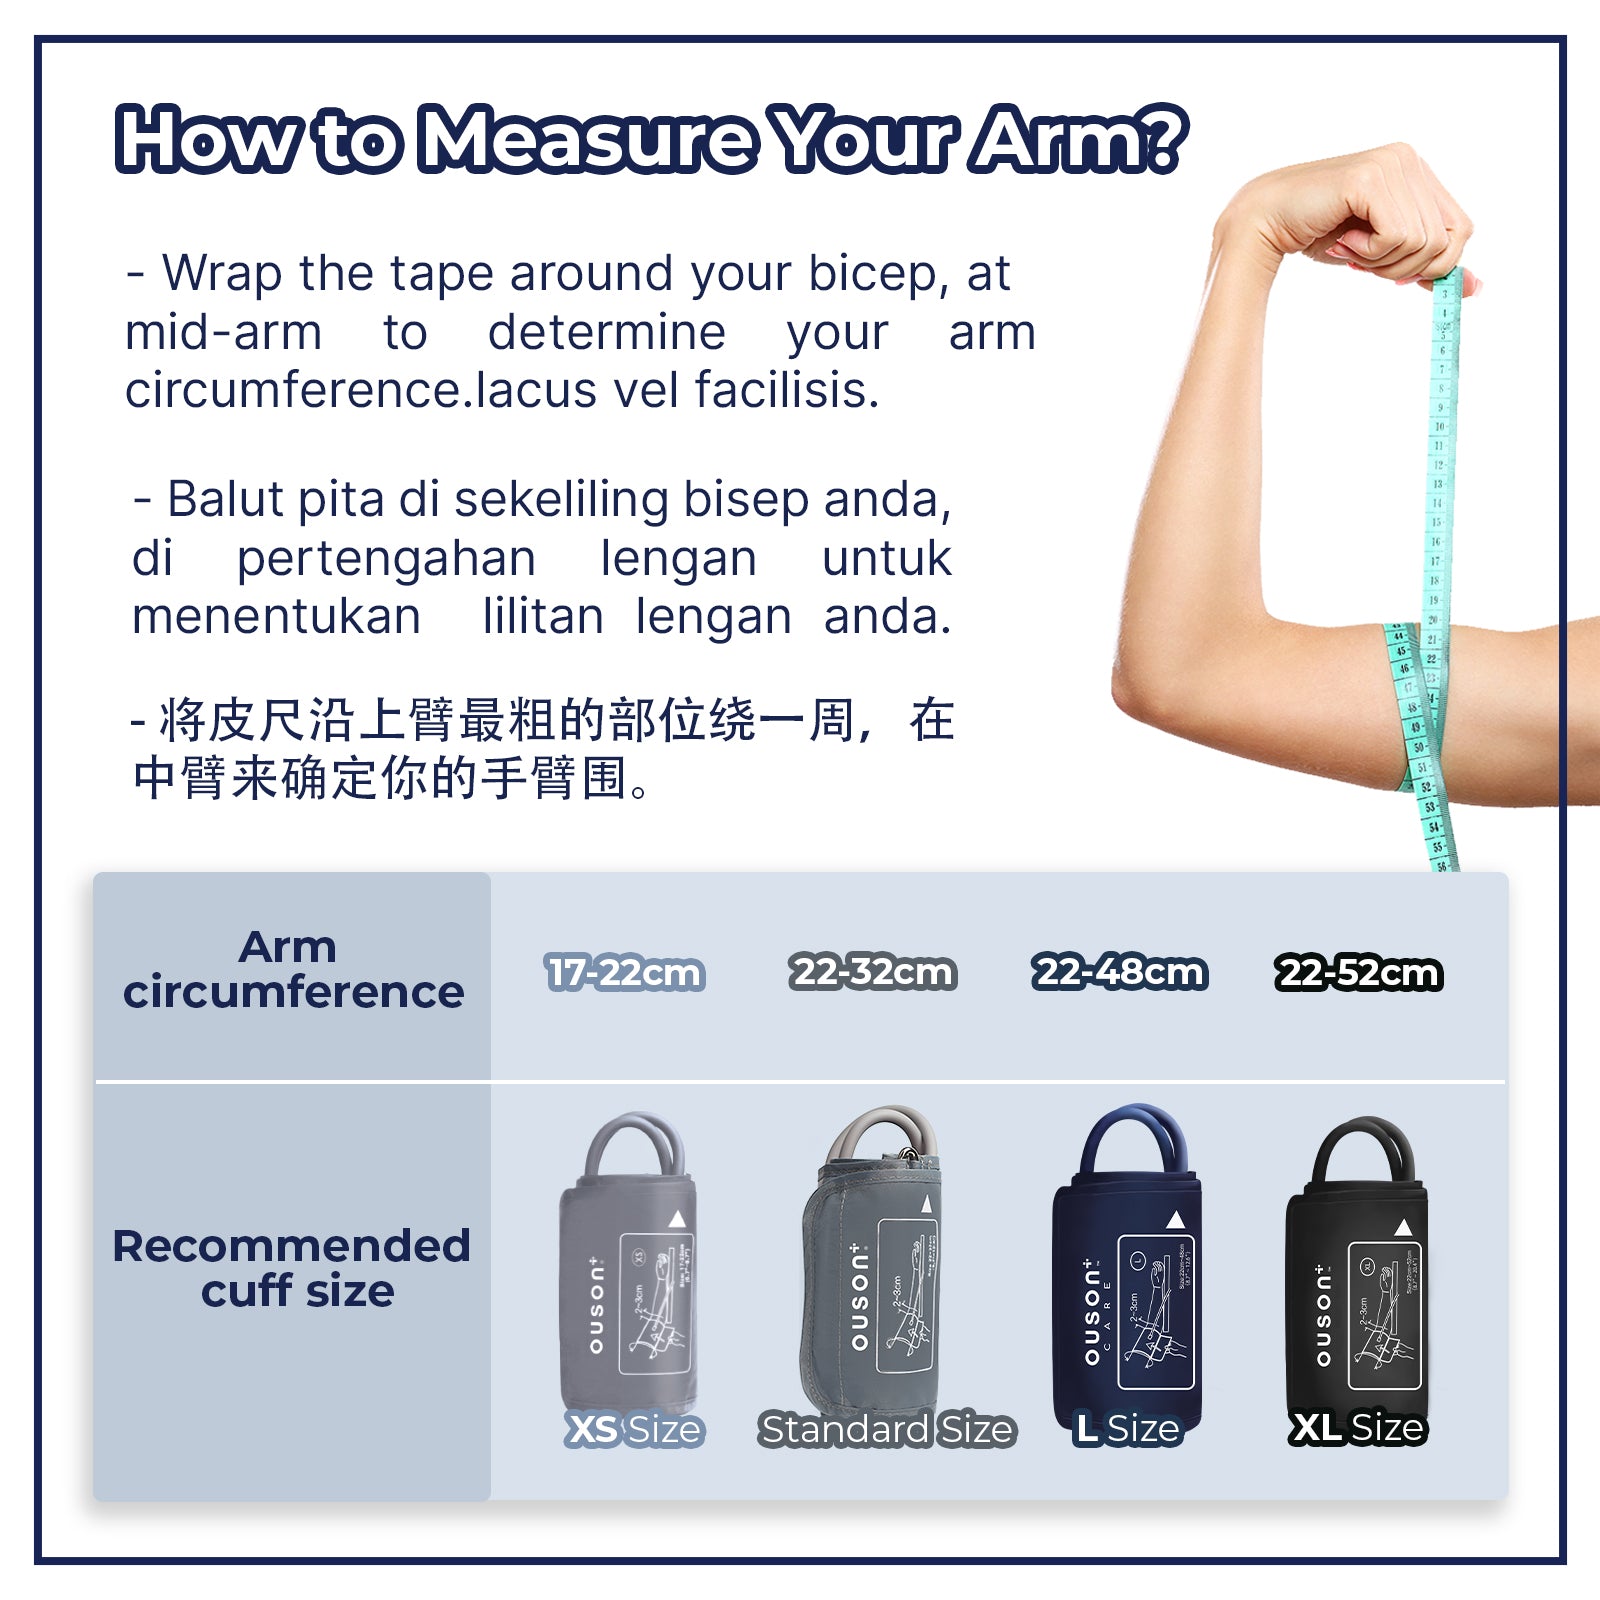 Ouson Senior Elite 3 Colour Backlight L Size (22cm-48cm) Arm Type Electronic Blood Pressure Monitor